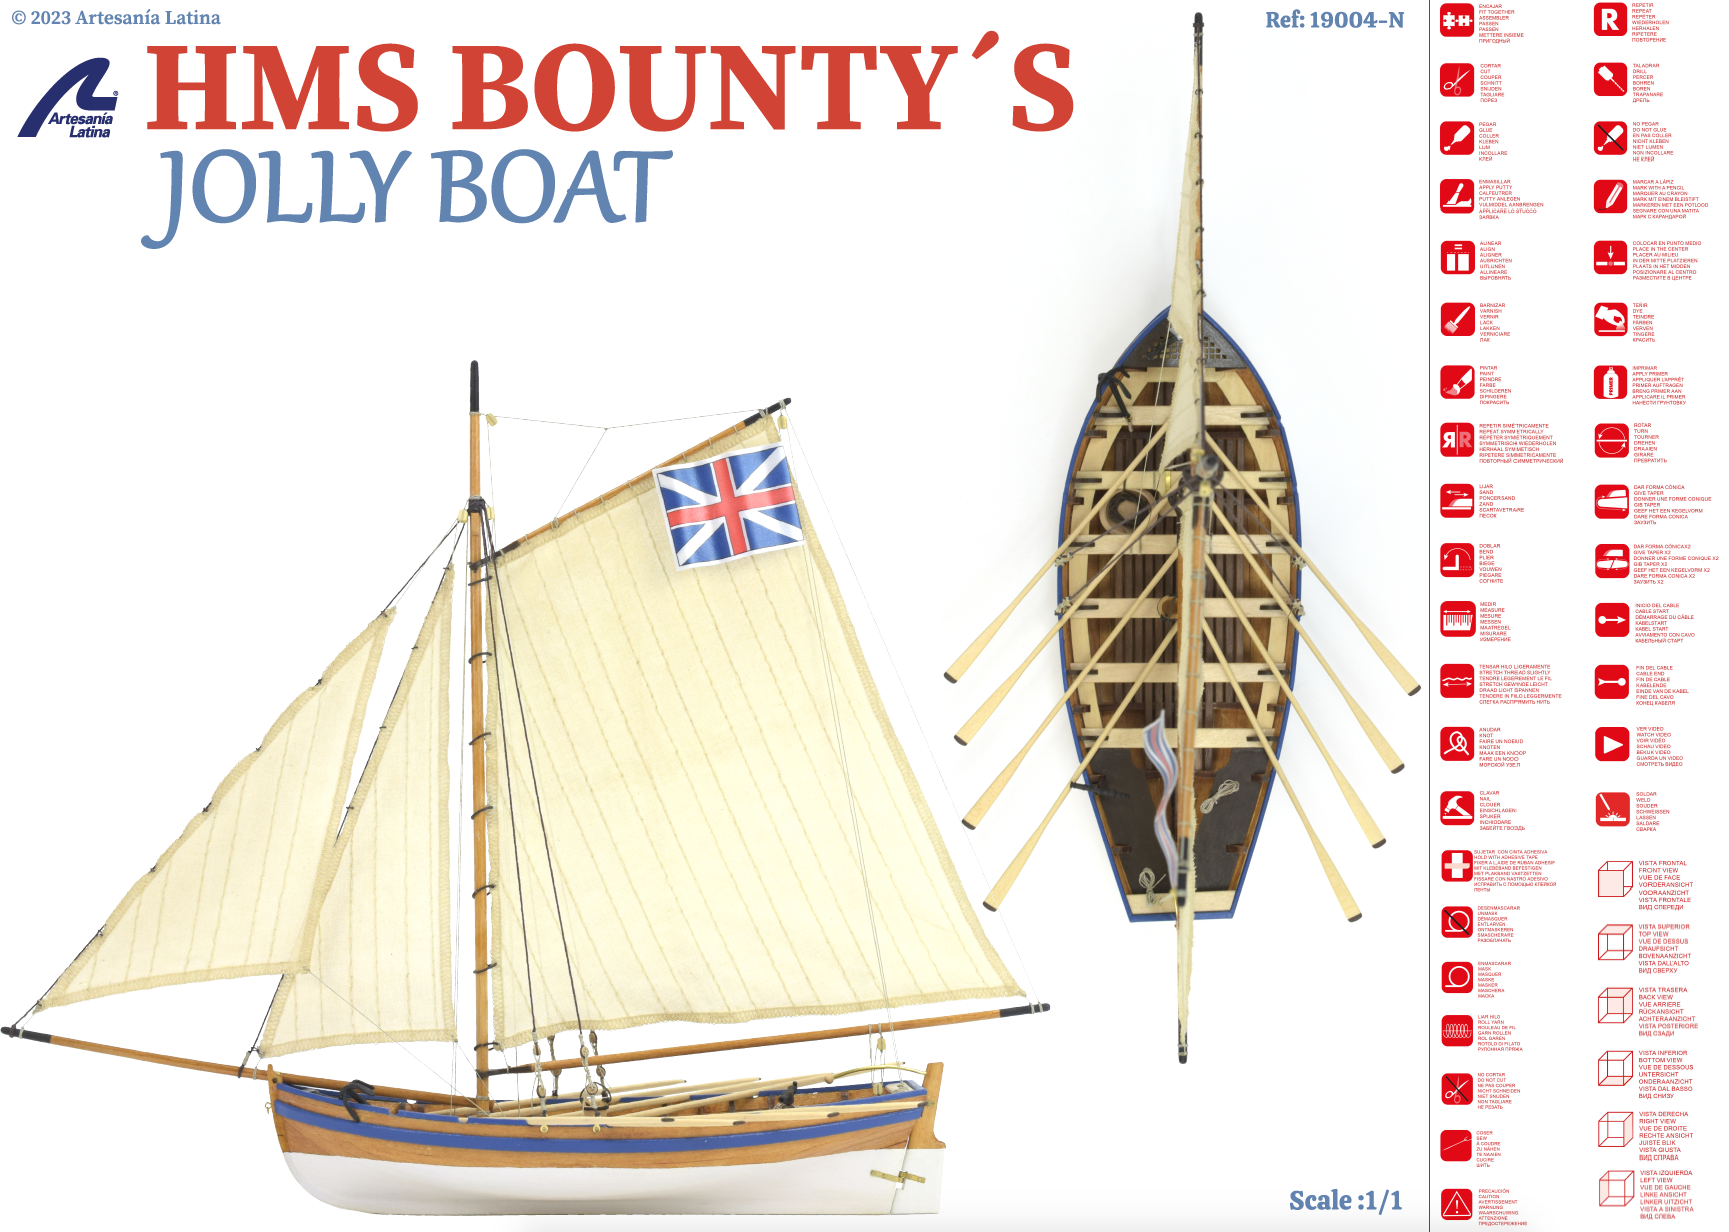 Plano Modelo a Escala Jolly Boat HMS Bounty (19004-N). Renovado Kit 1:25 en Madera de Artesanía Latina.